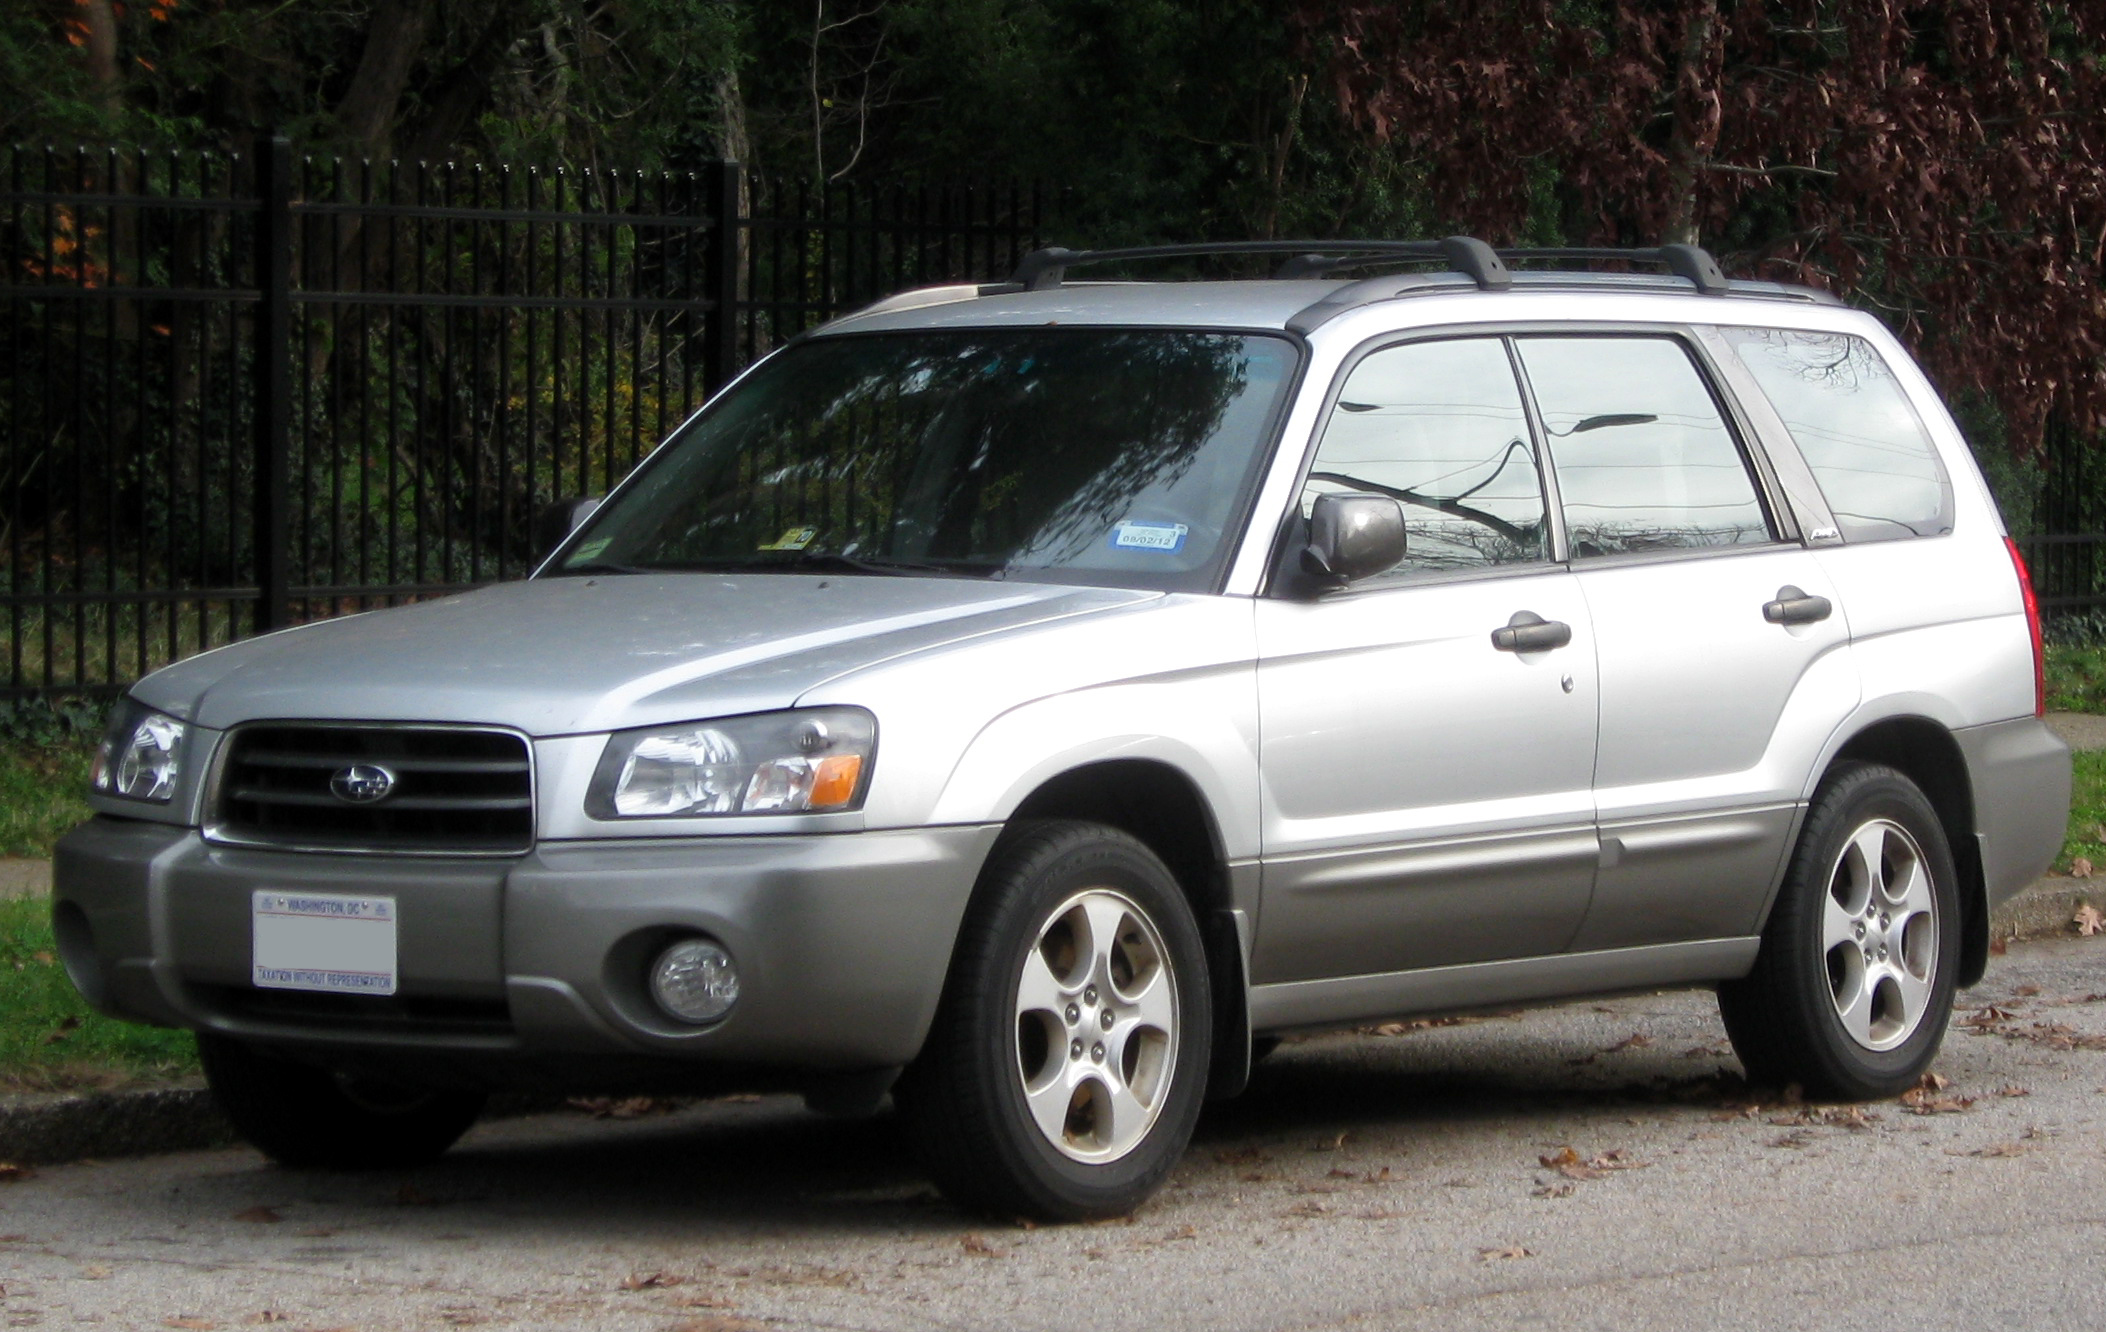 File:2003-2005 Subaru Forester -- 11-26-2011.jpg - Wikimedia Commons